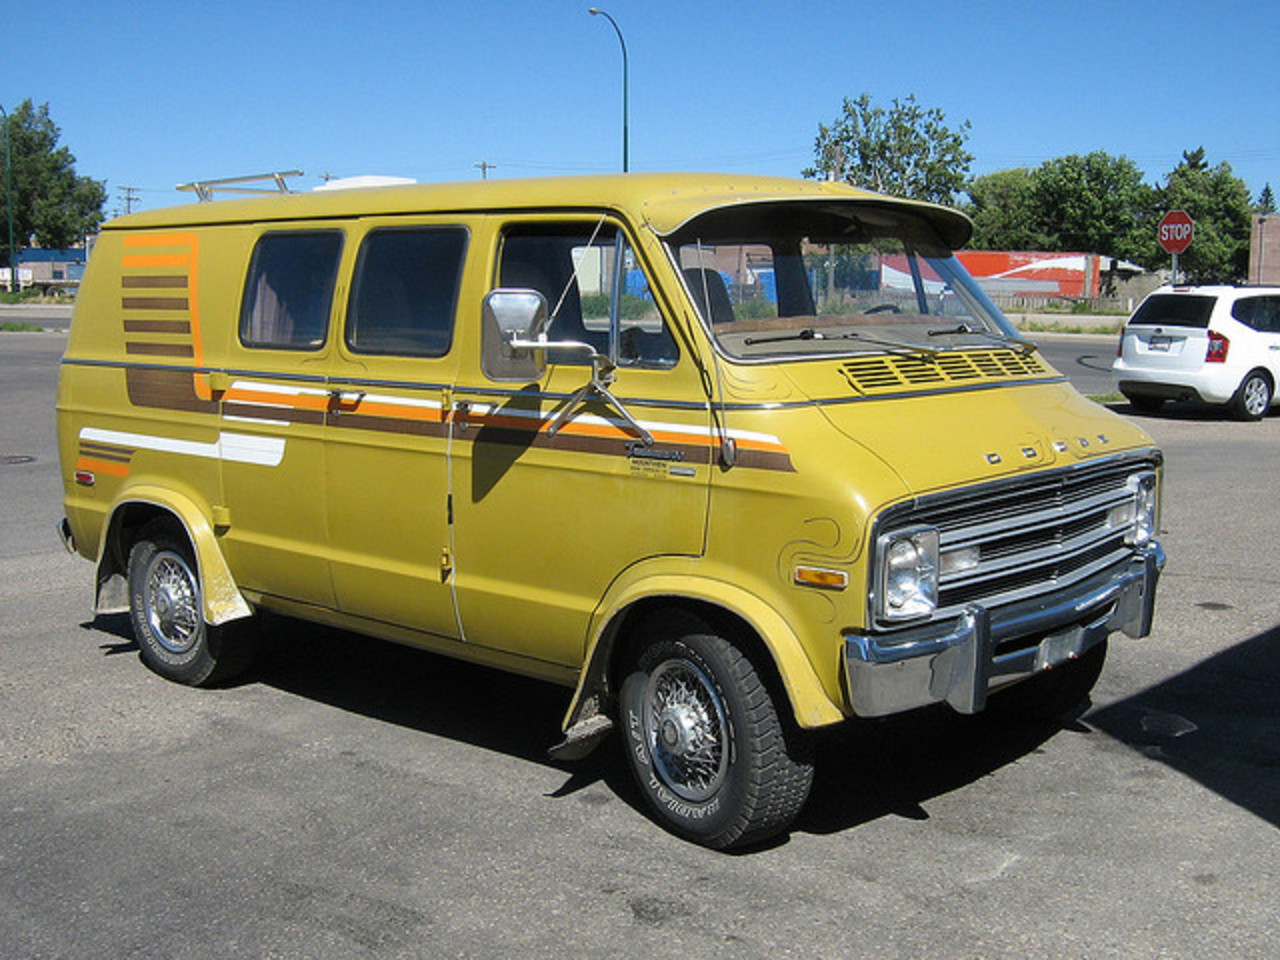 Disco era Dodge Tradesman Van | Flickr - Photo Sharing!